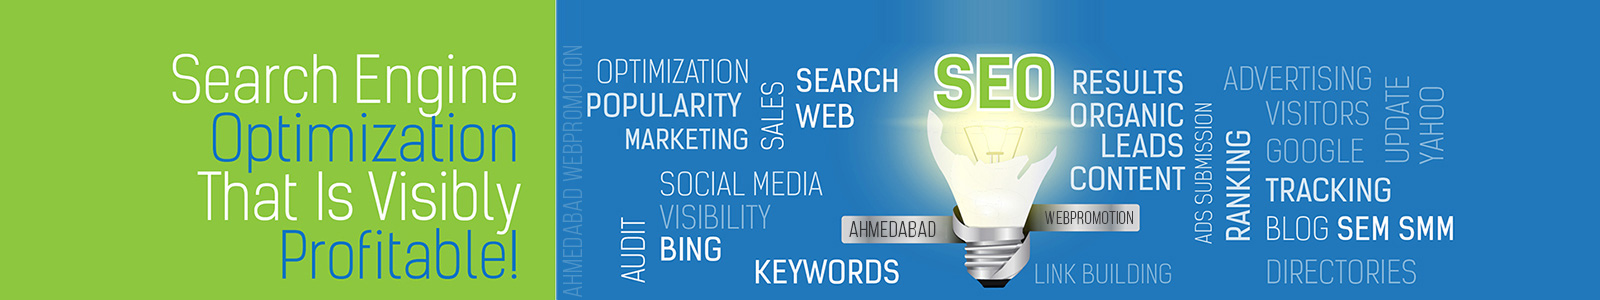 Ahmedabad Search Engine Optimization